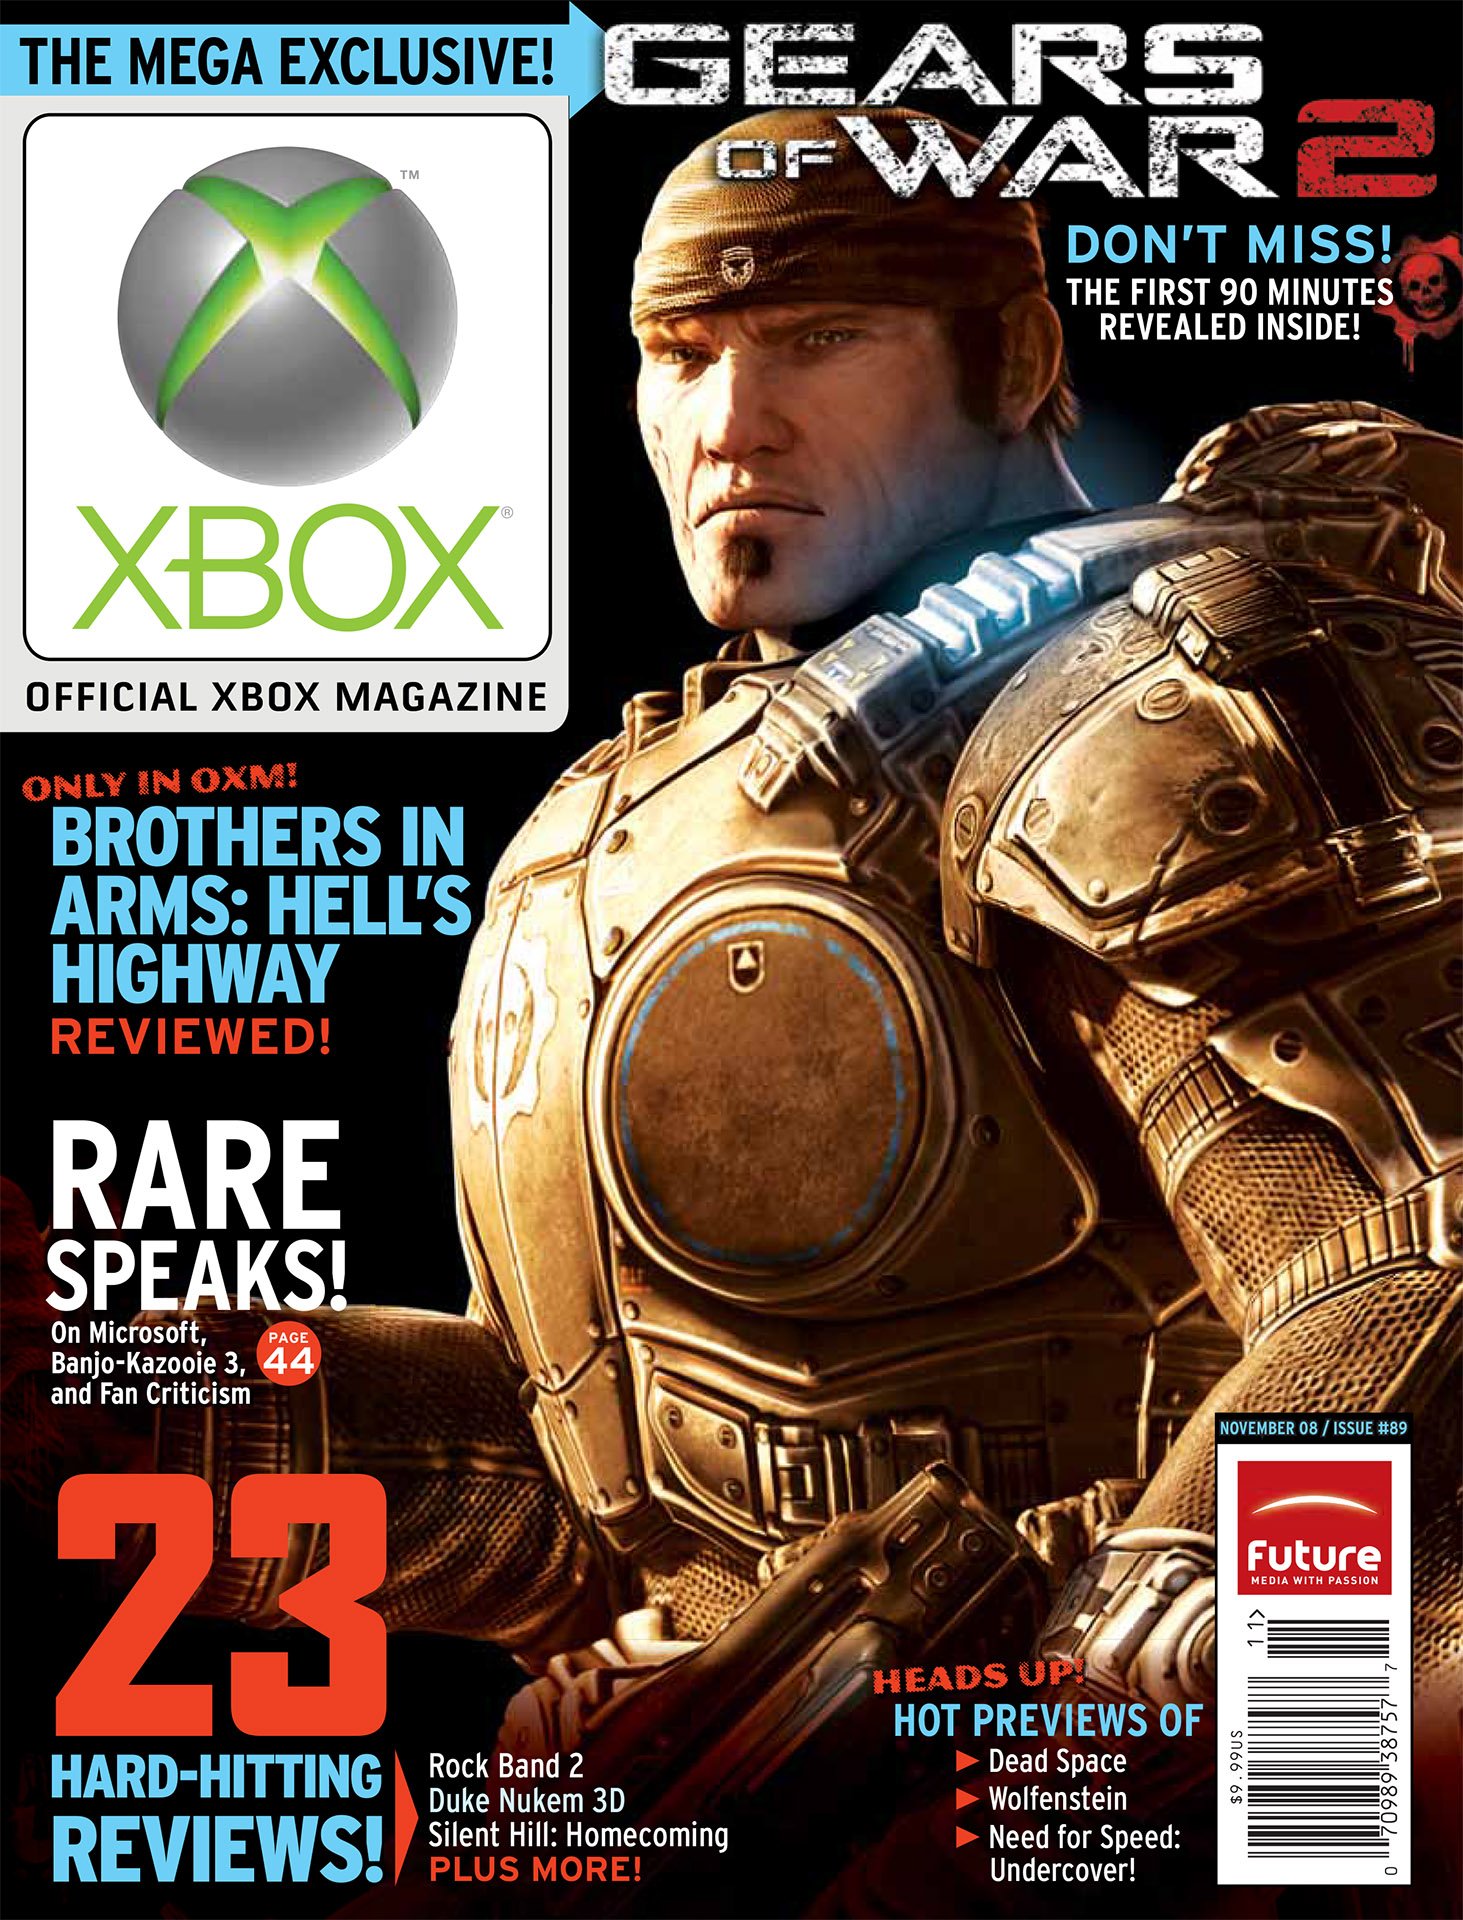 Official Xbox Magazine 089 November 2008